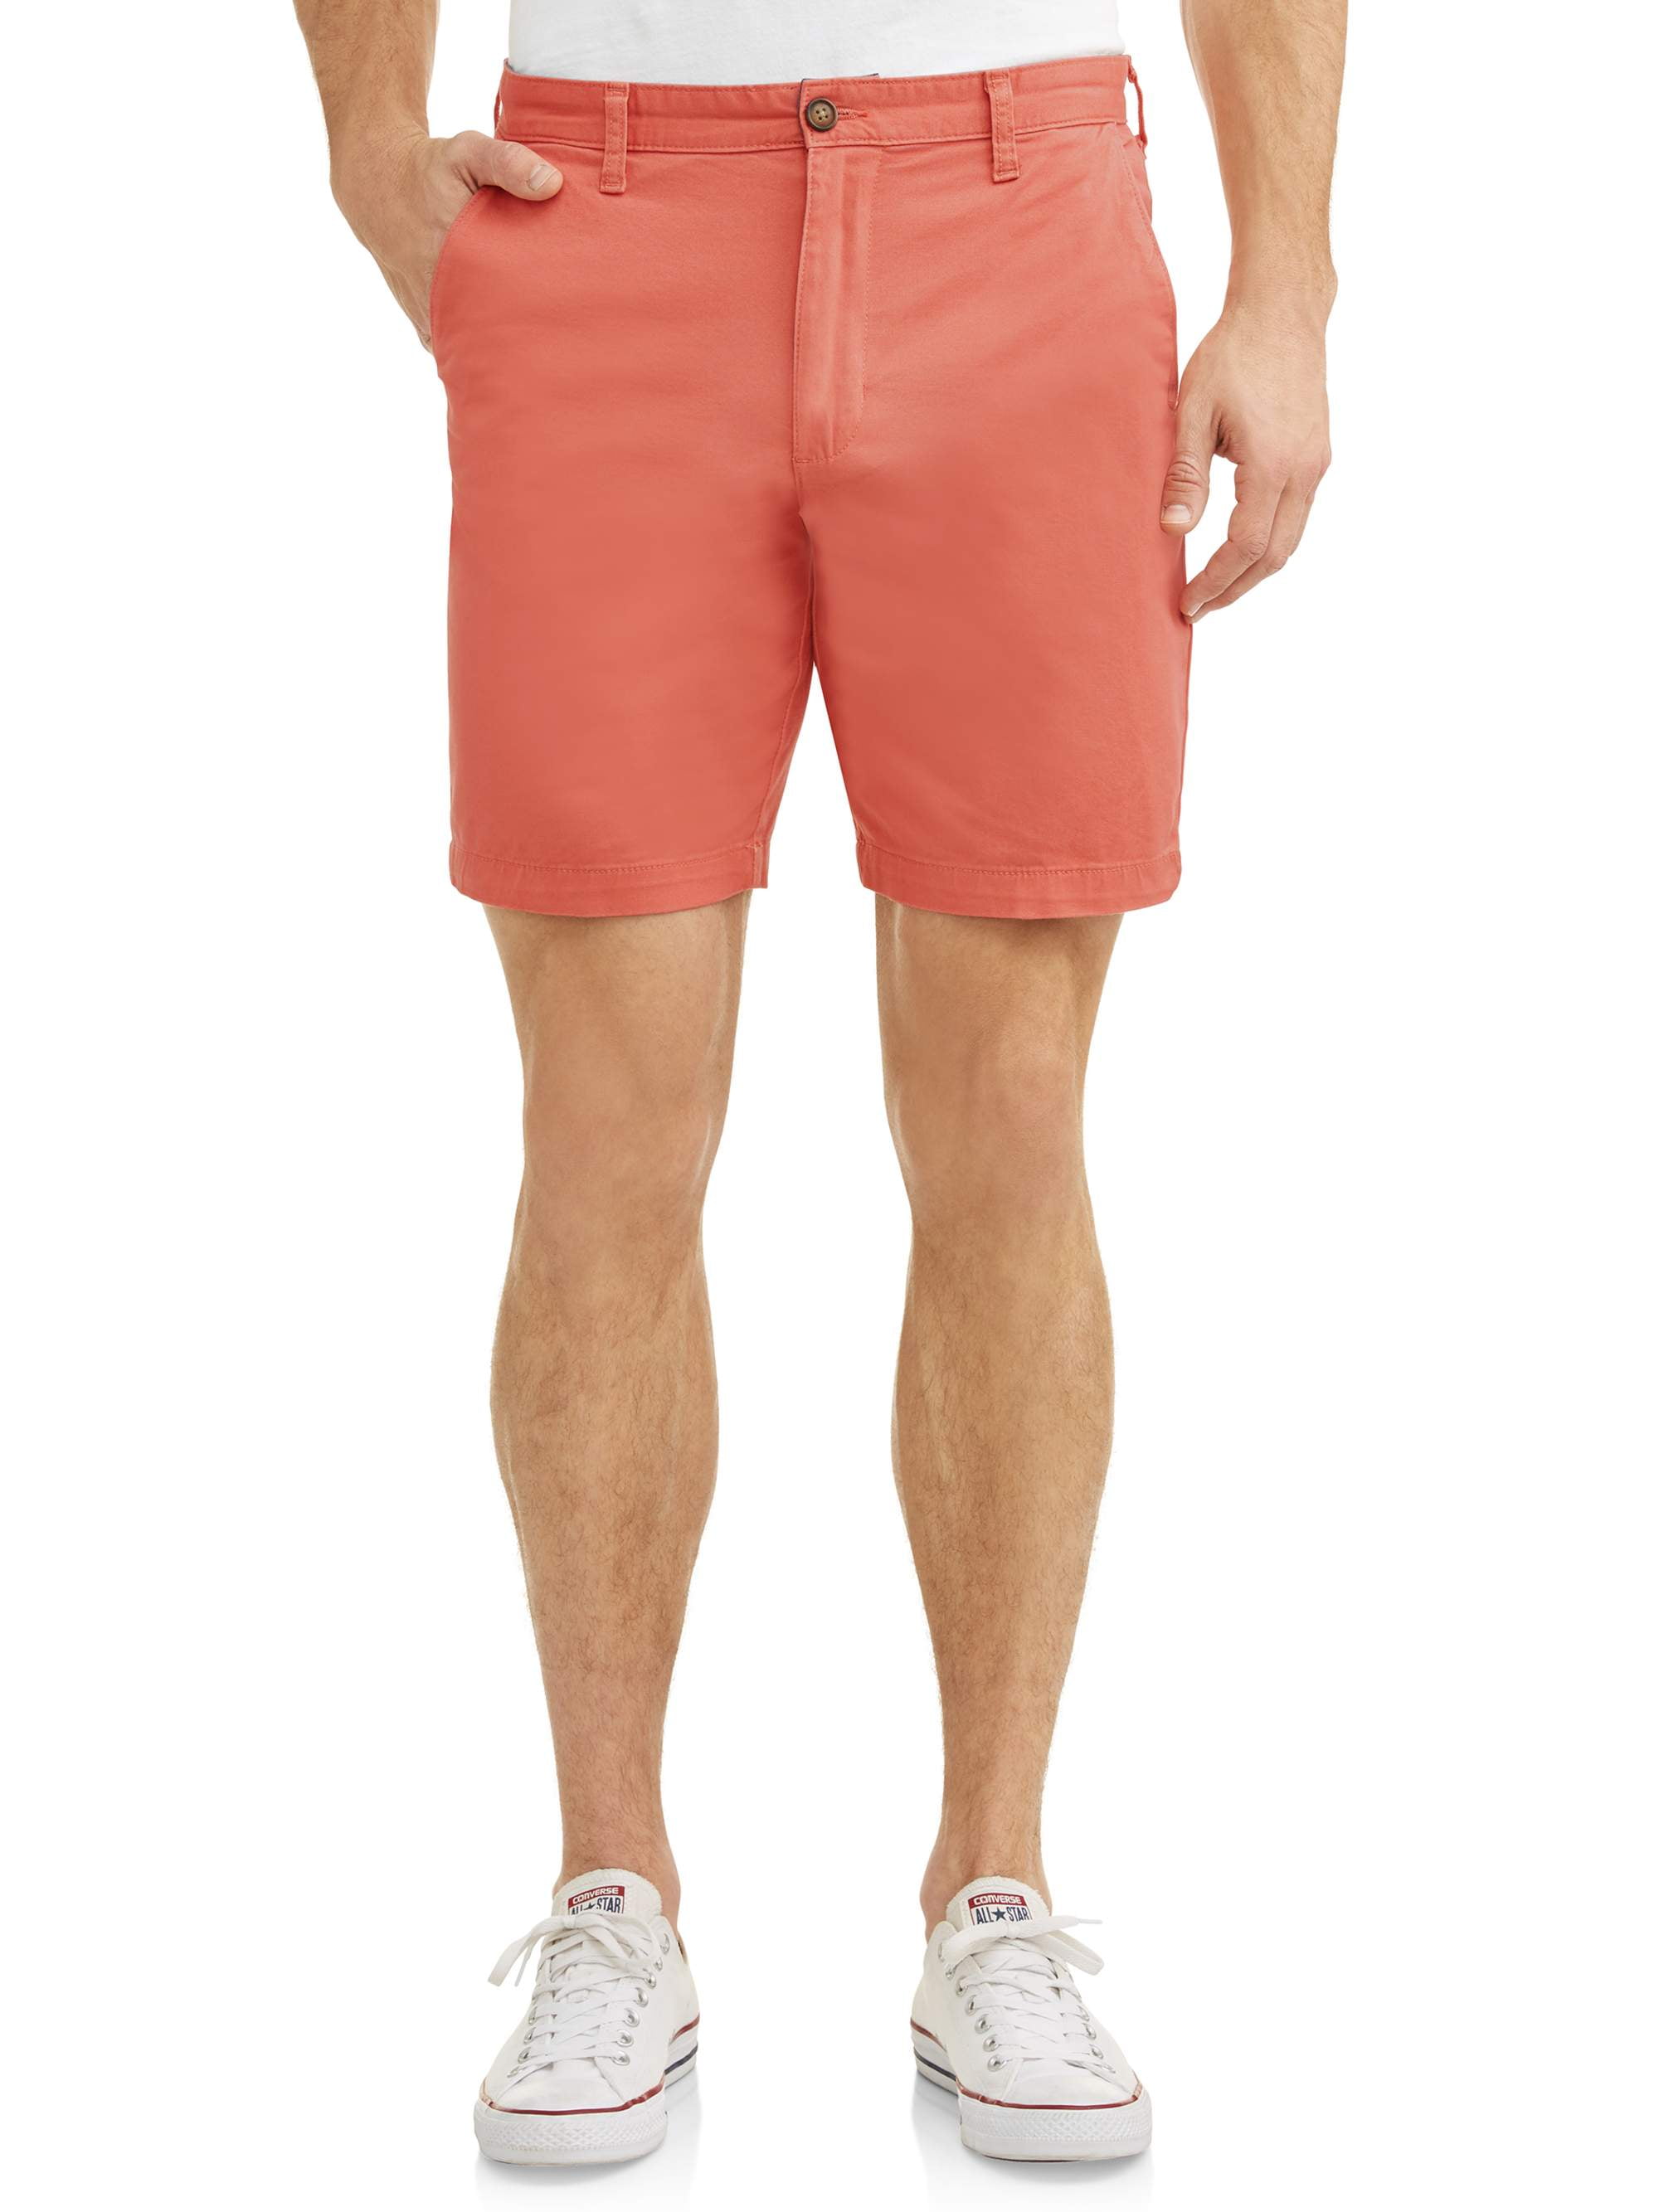 GINGTTO Mens Slim Fit 9 Inseam Flat-Front Shorts Chinos Elastic Waist